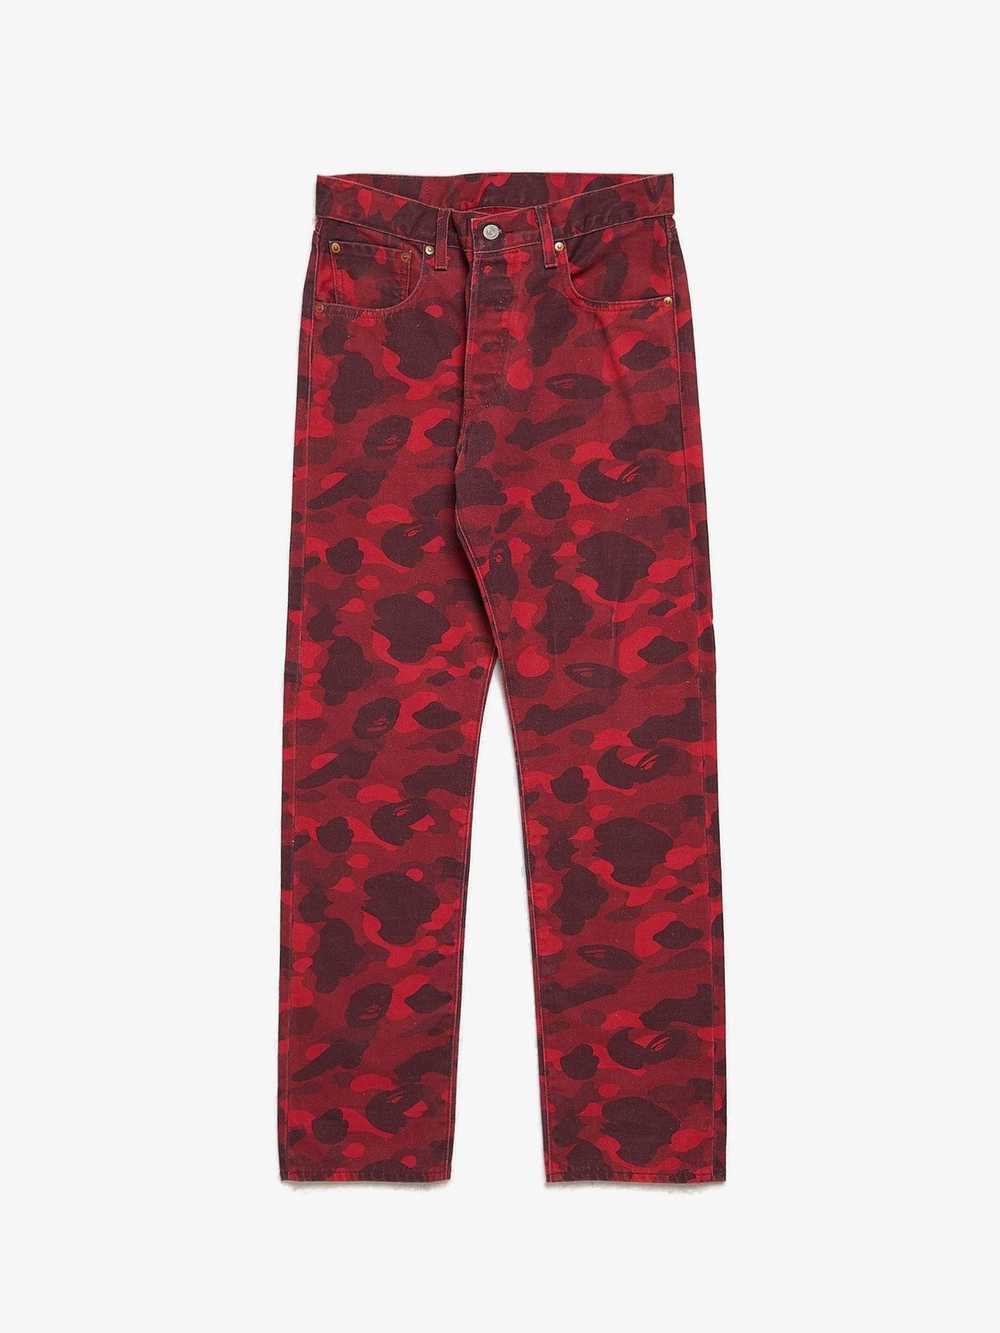 Bape Red Multi Logoed Camo Buttoned Cotton Jeans - image 1